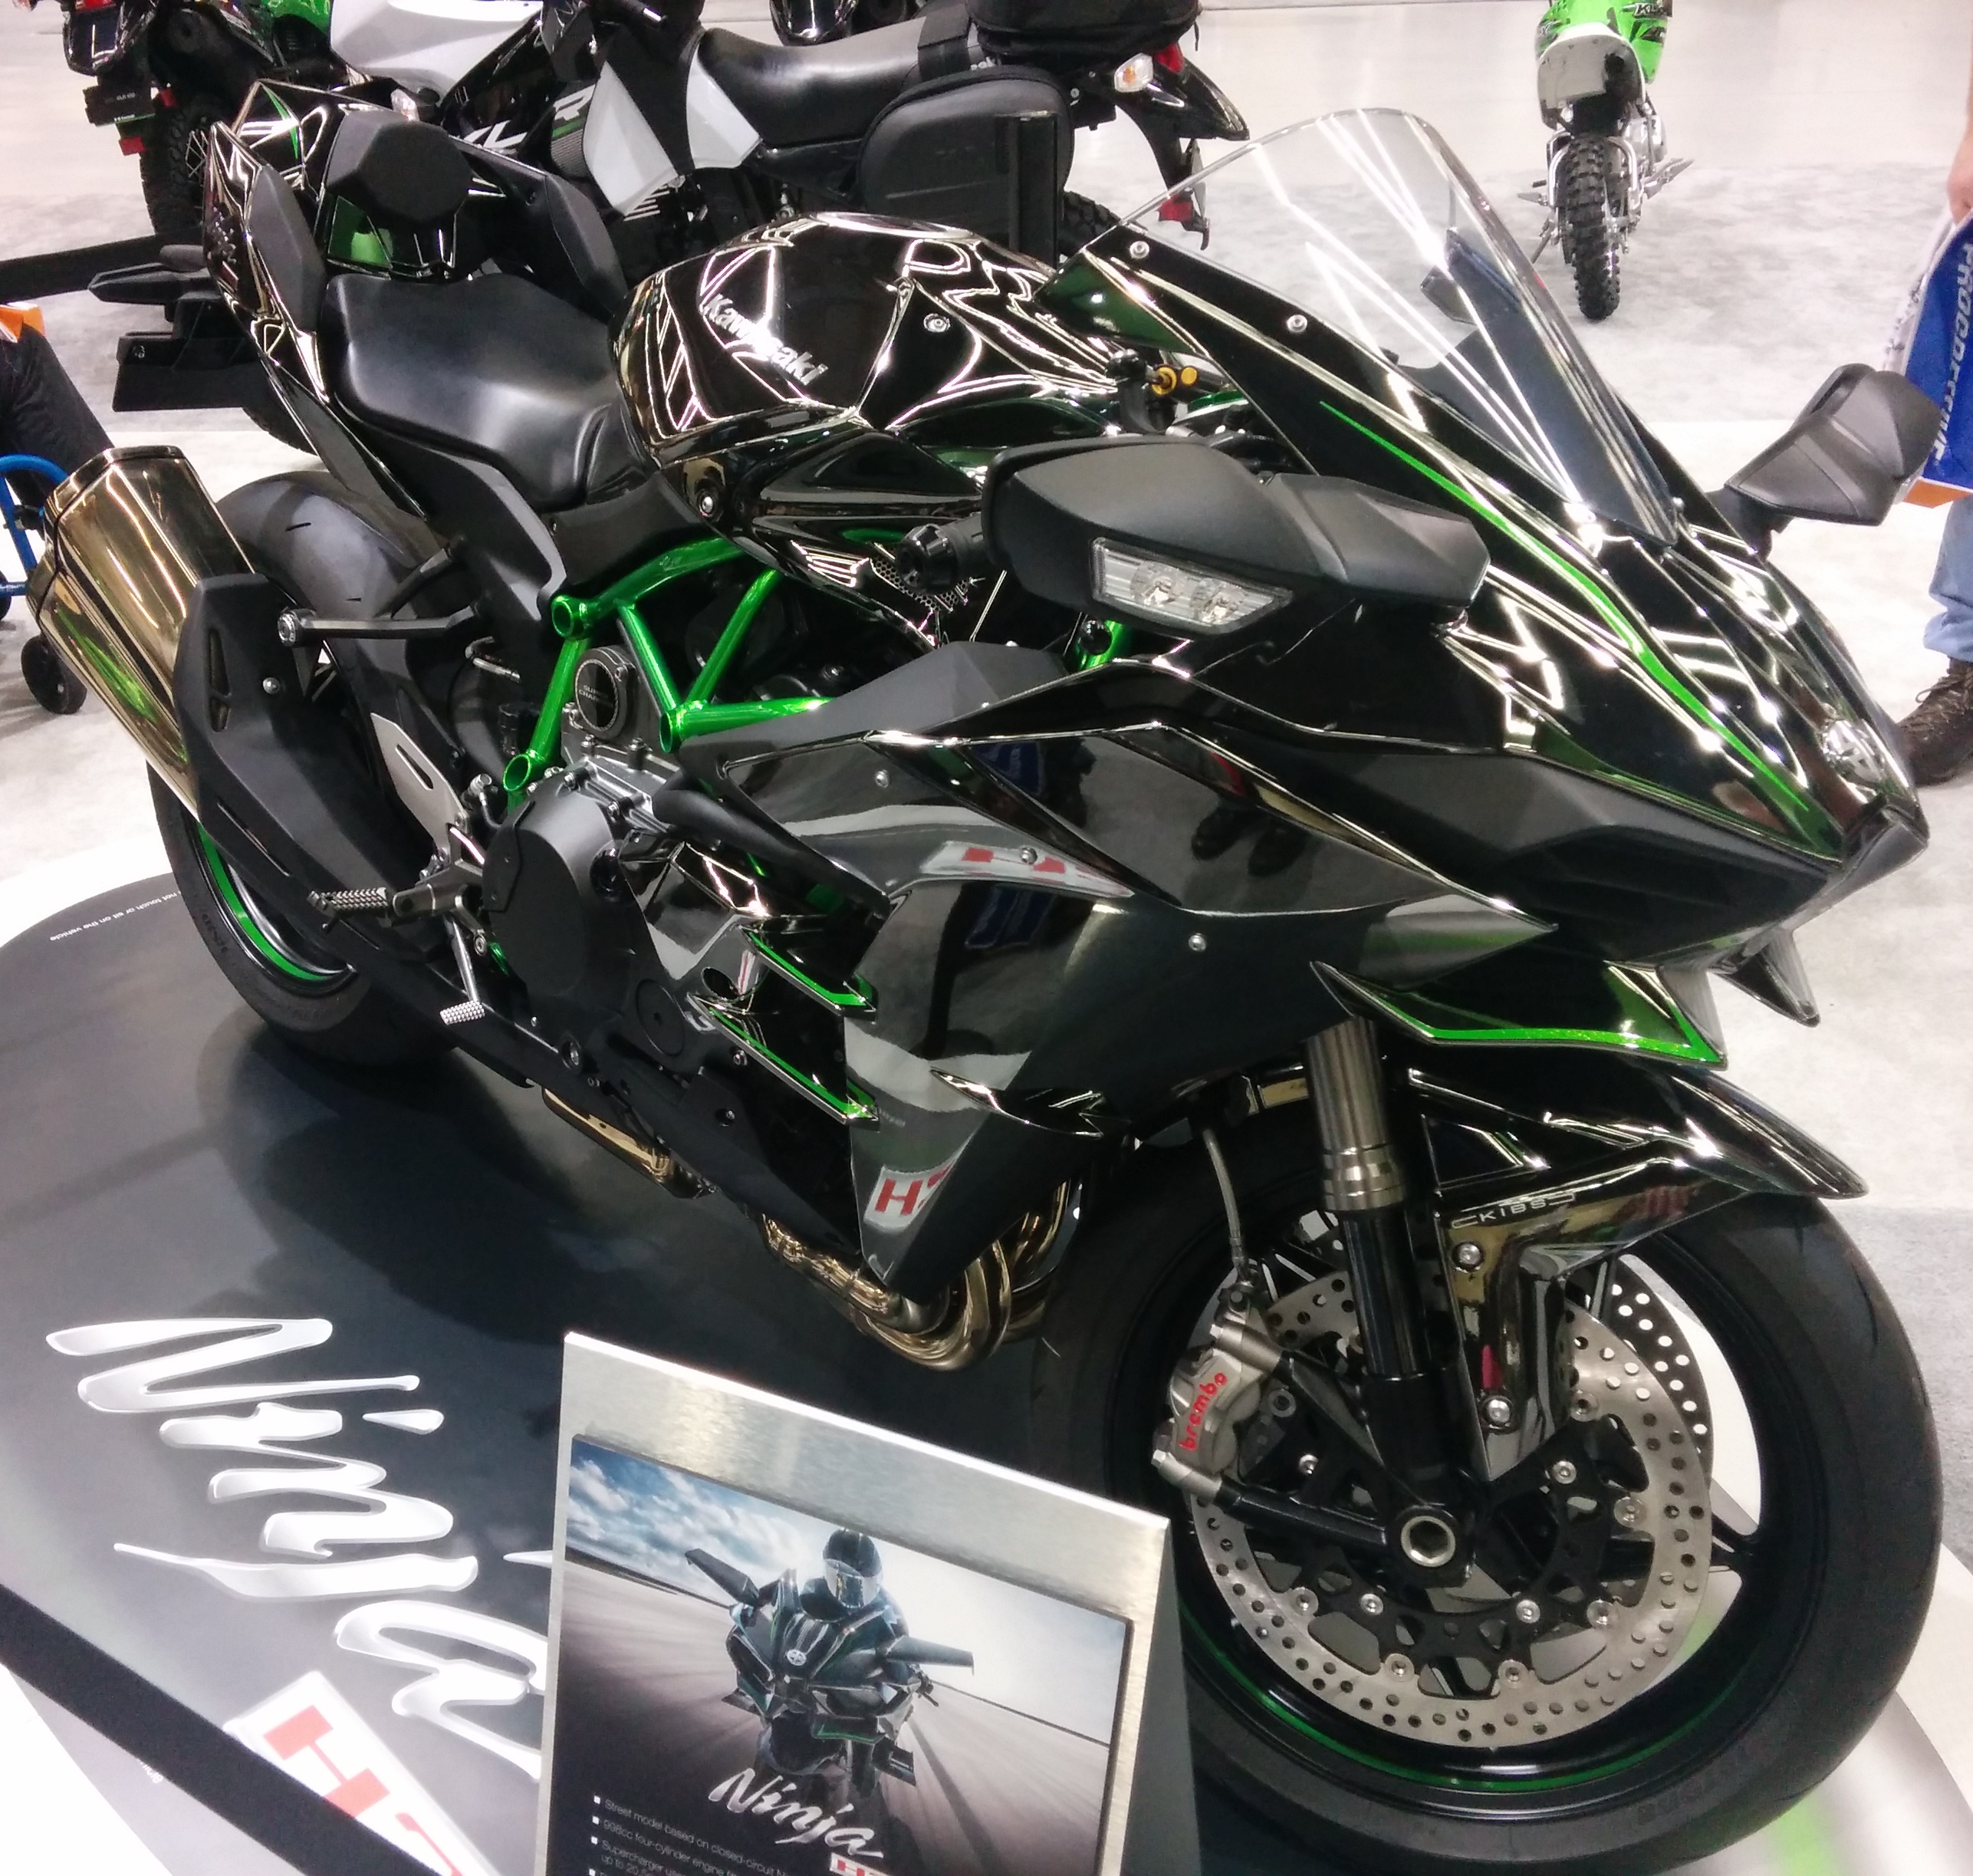 Kawasaki_Ninja_H2_Seattle_motorcycle_show.jpg